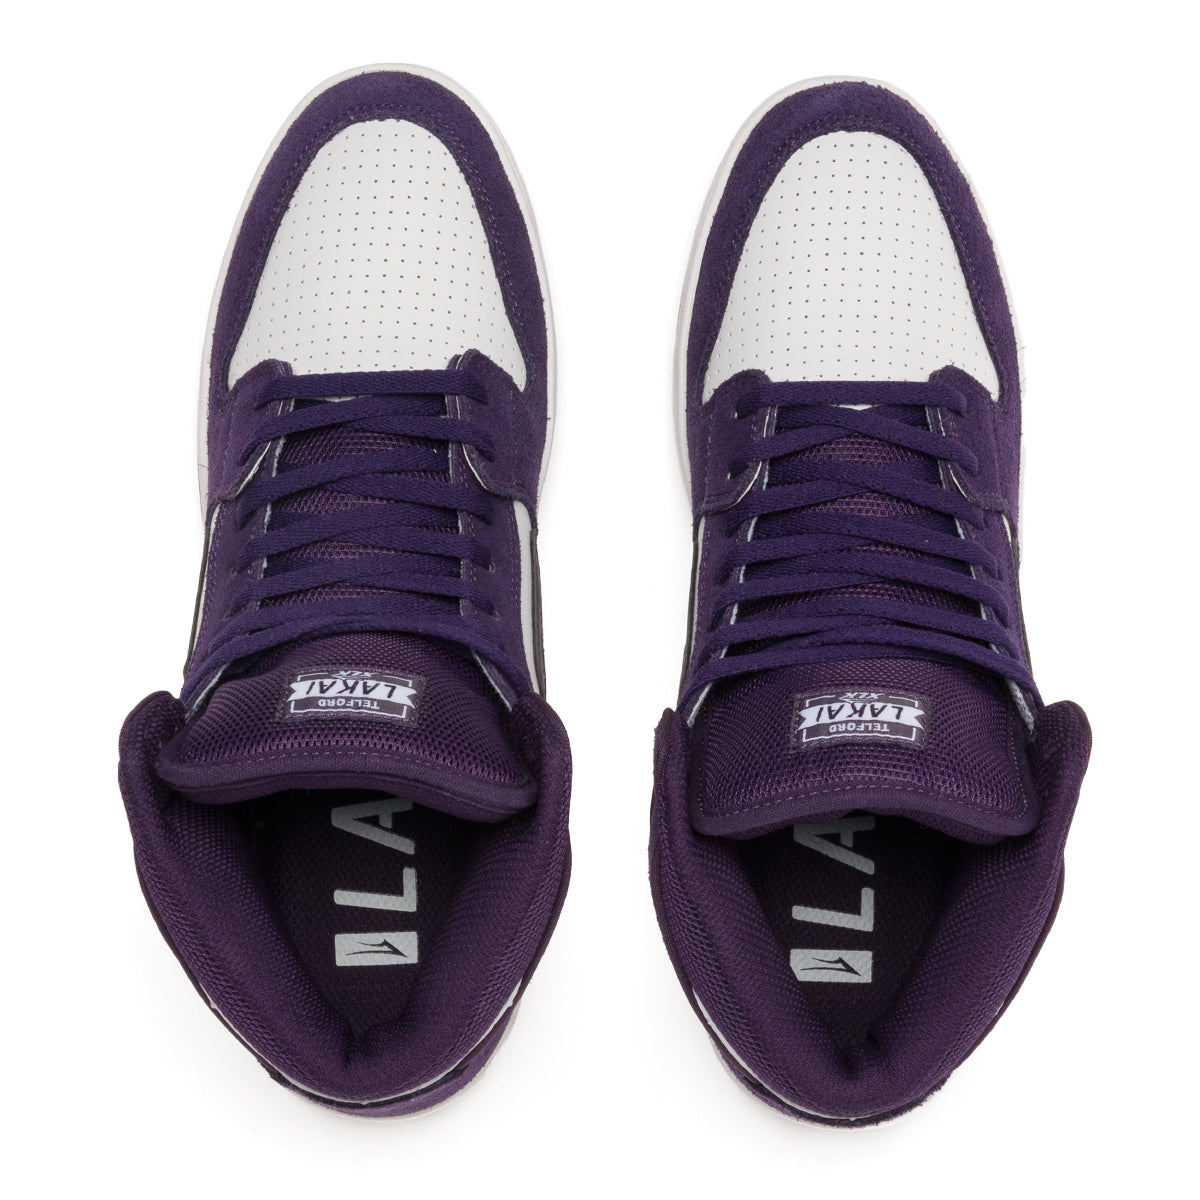 Lakai - Telford Grape Suede Skateboard Shoes - Invisible Board Shop